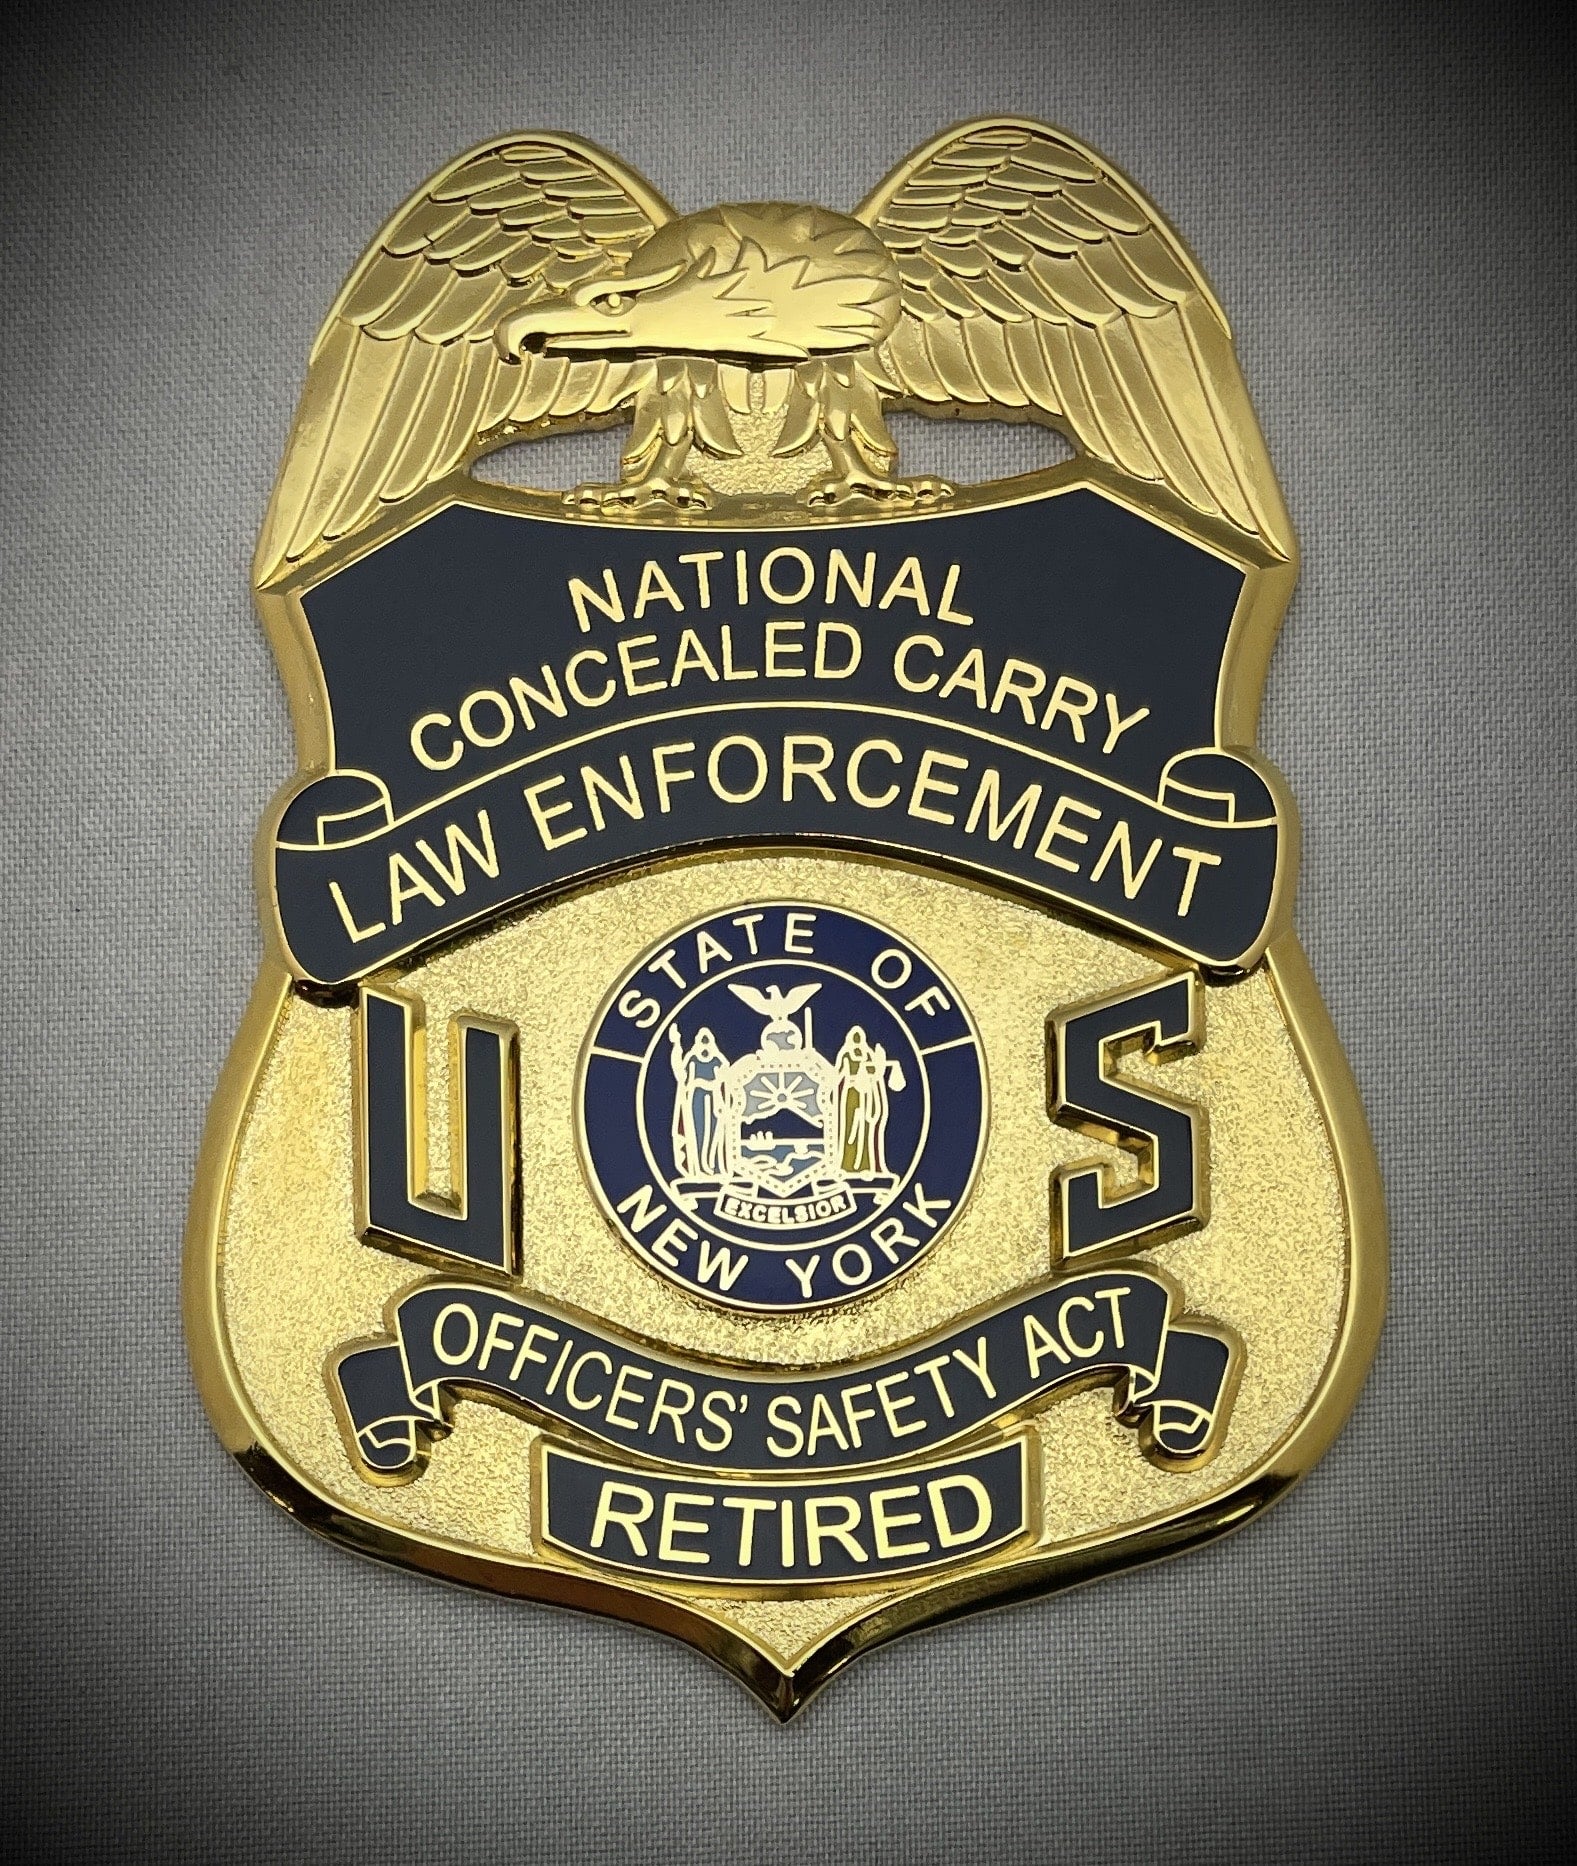 National Concealed Carry Law Enforcement Badge with leather belt clip holder